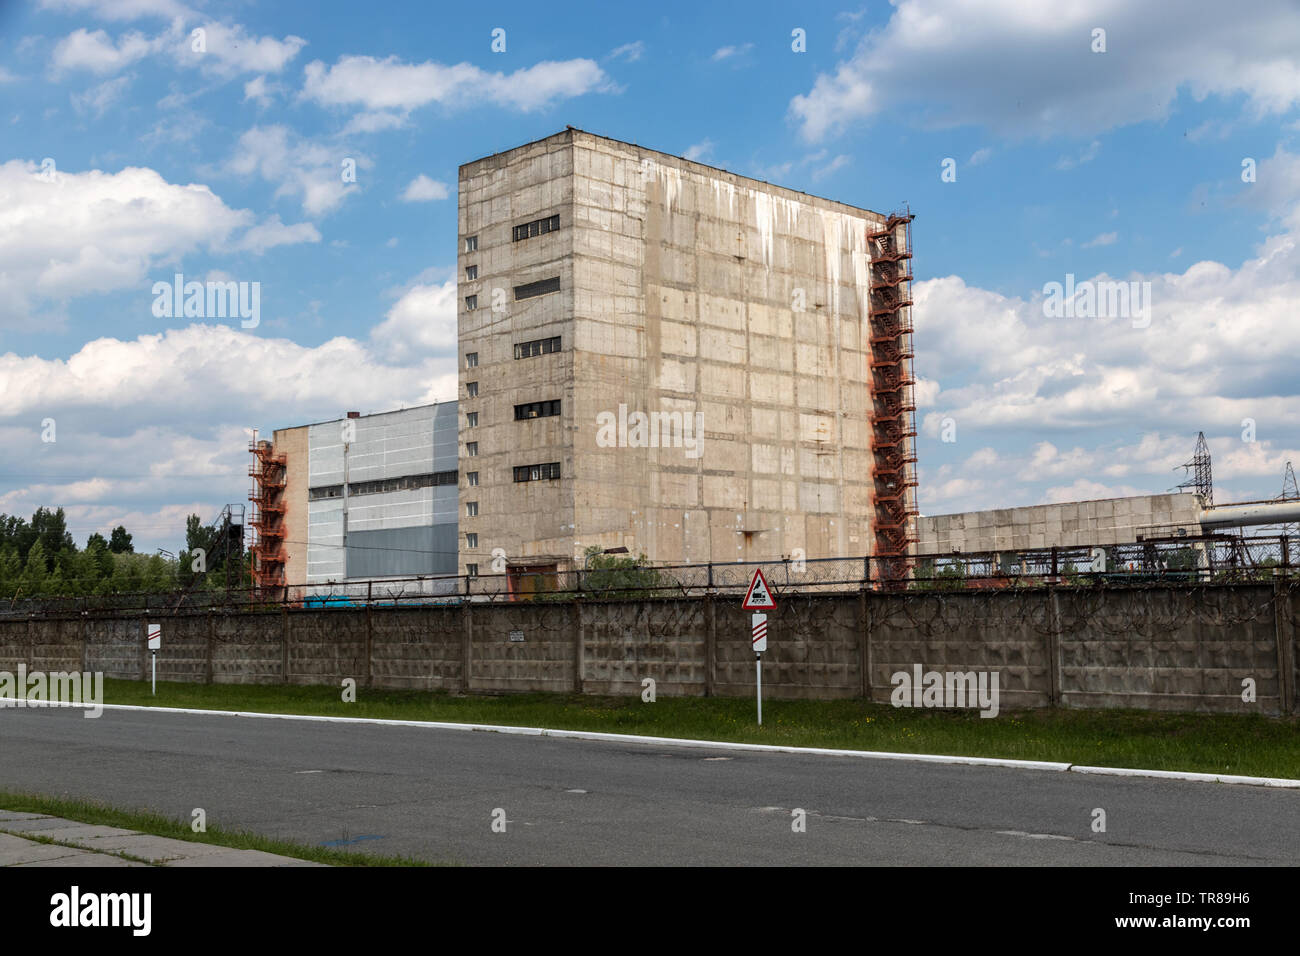 Mai 2019 - Kernkraftwerk Tschernobyl, Reaktor 4, Sperrzone von Tschernobyl, Ukraine Stockfoto